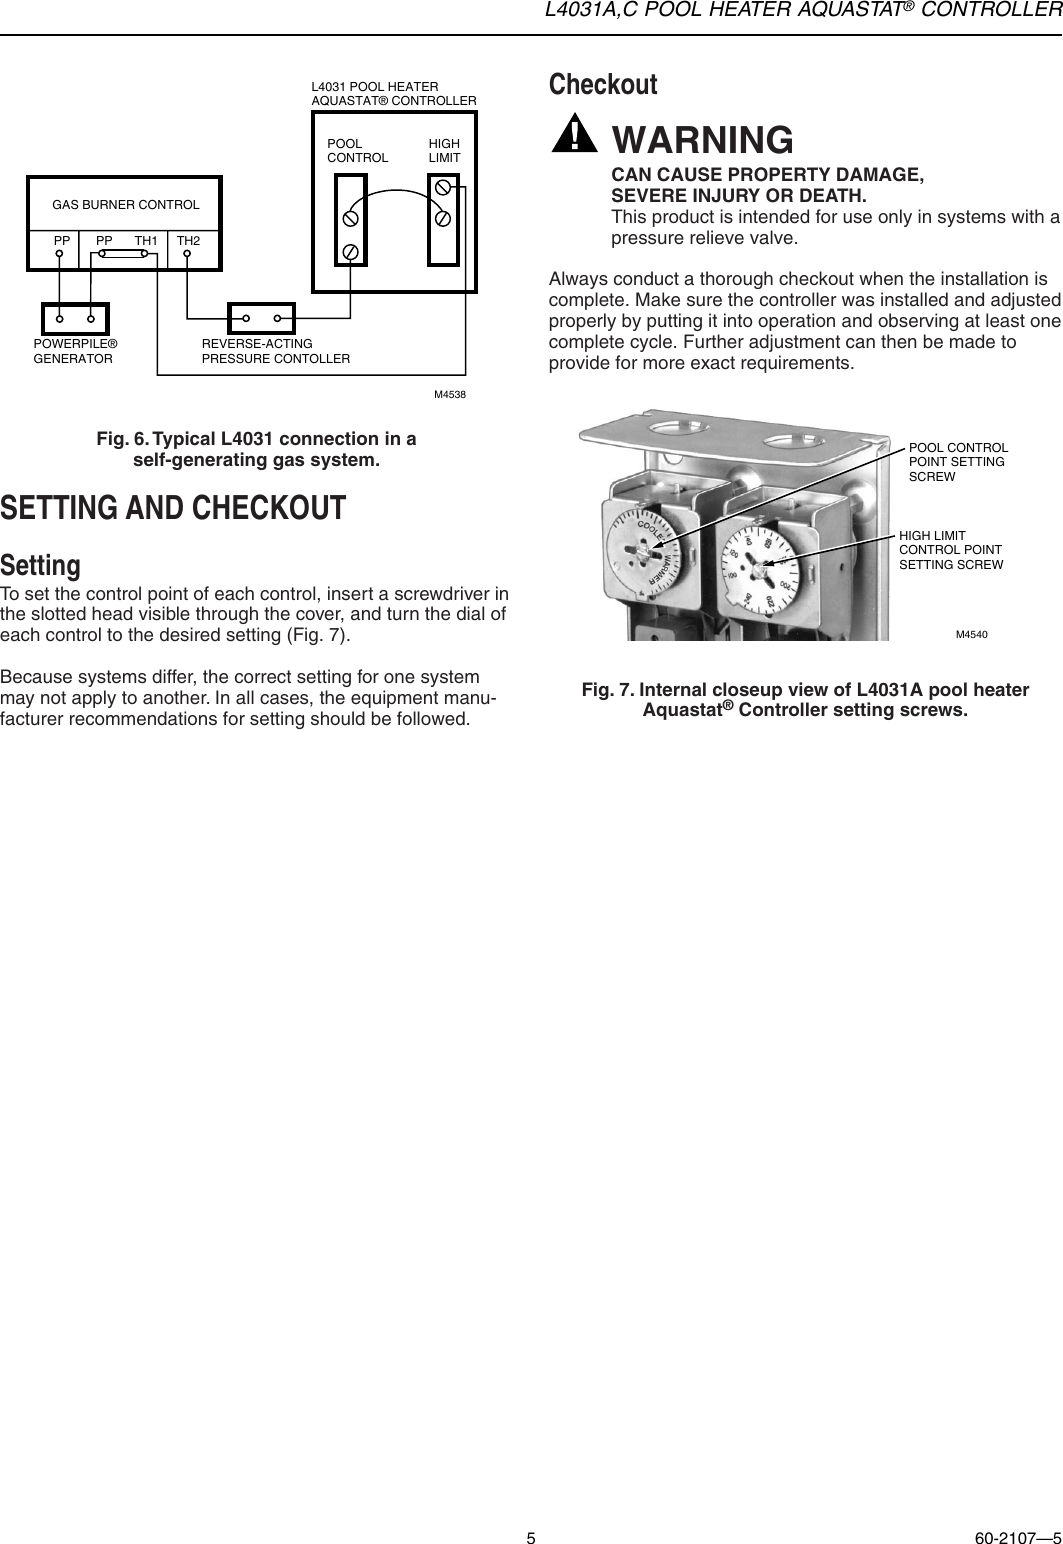 Page 5 of 12 - Honeywell Honeywell-C-Users-Manual- 60-2107 - L4031A,C Pool Heater Aquastat® Controller  Honeywell-c-users-manual